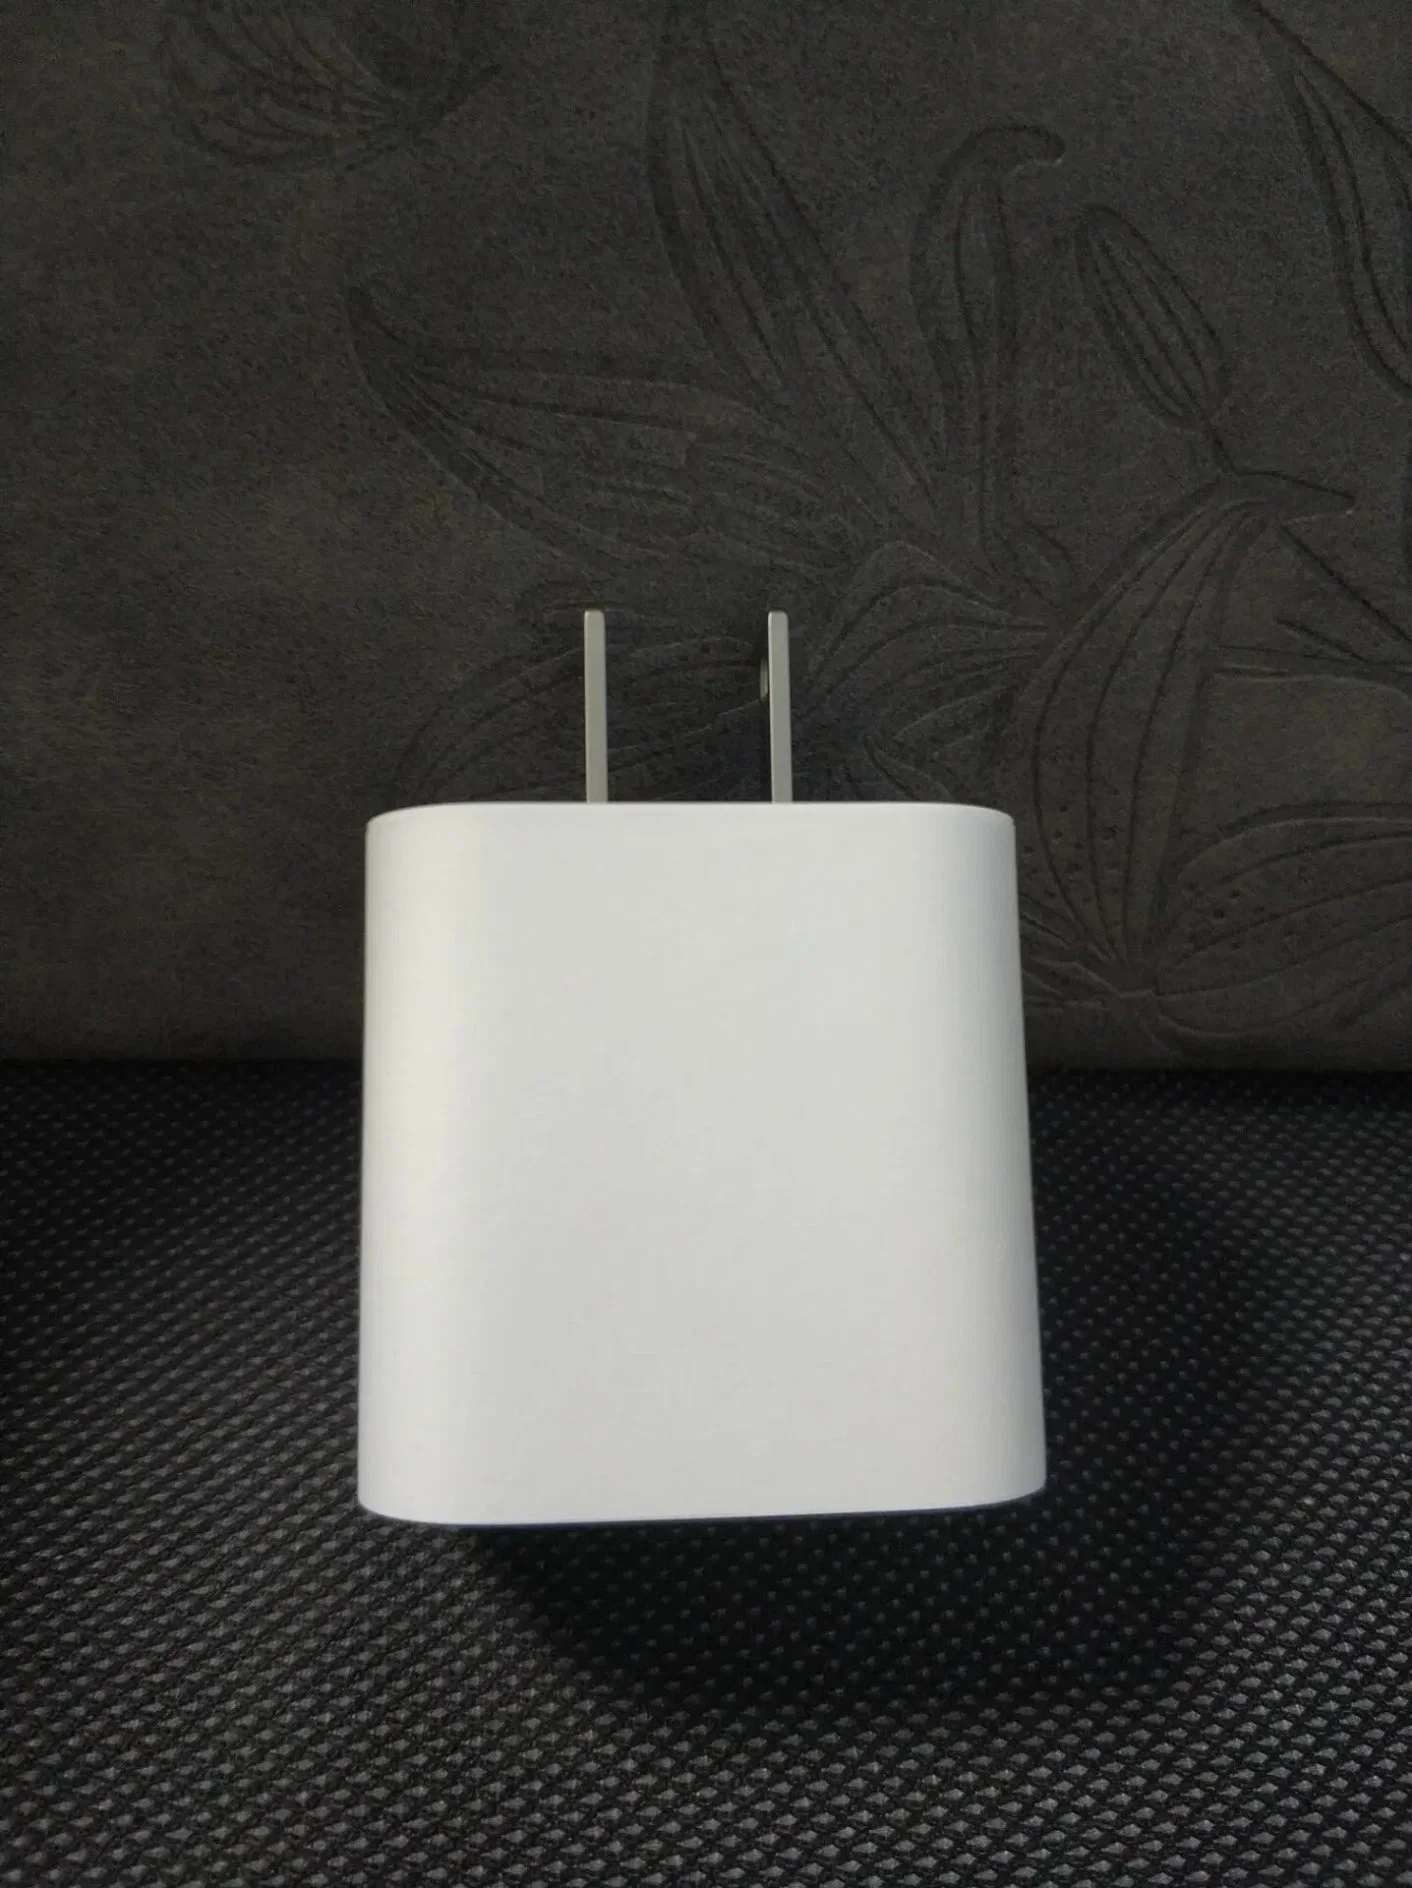 100% Original 18W EU Power Charging Adapter for iPad Air